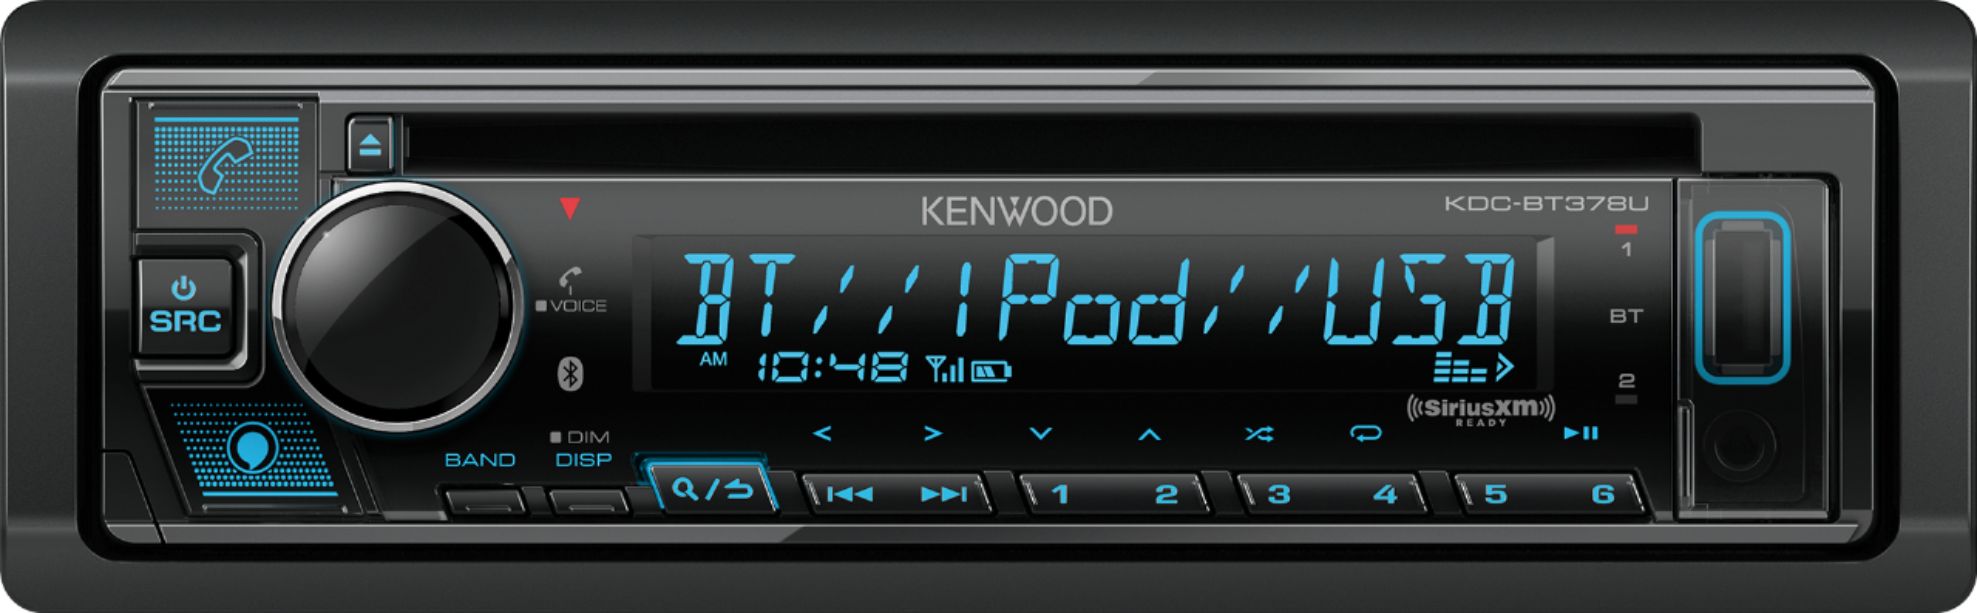 KENWOOD KRC-207s Detachable Car Stereo Face Plate 